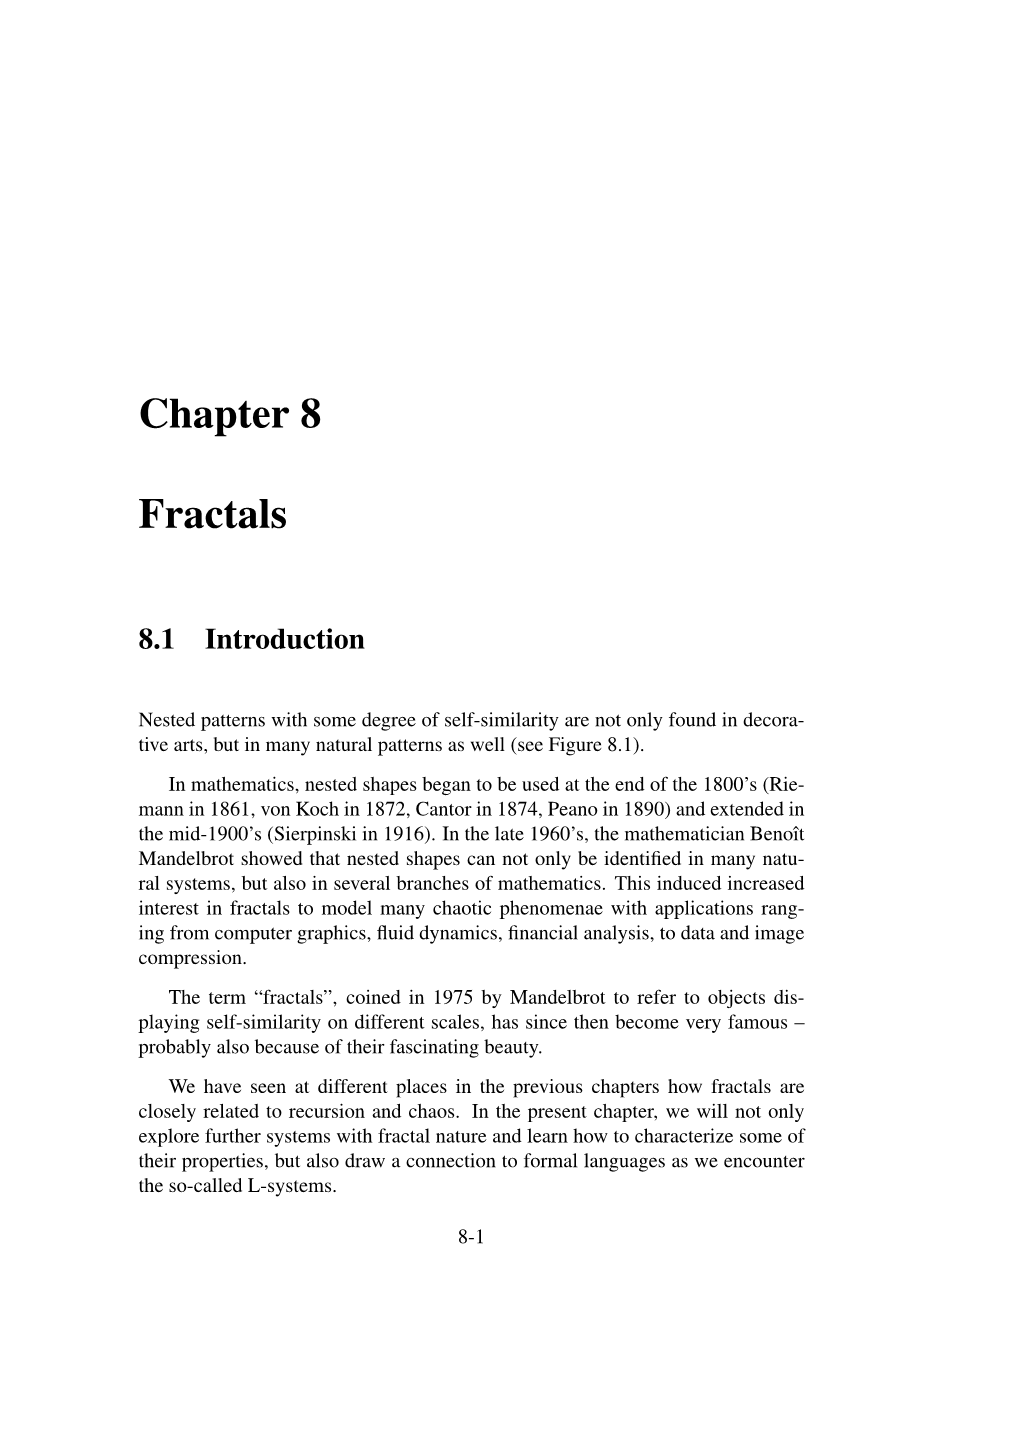 Chapter 8 Fractals